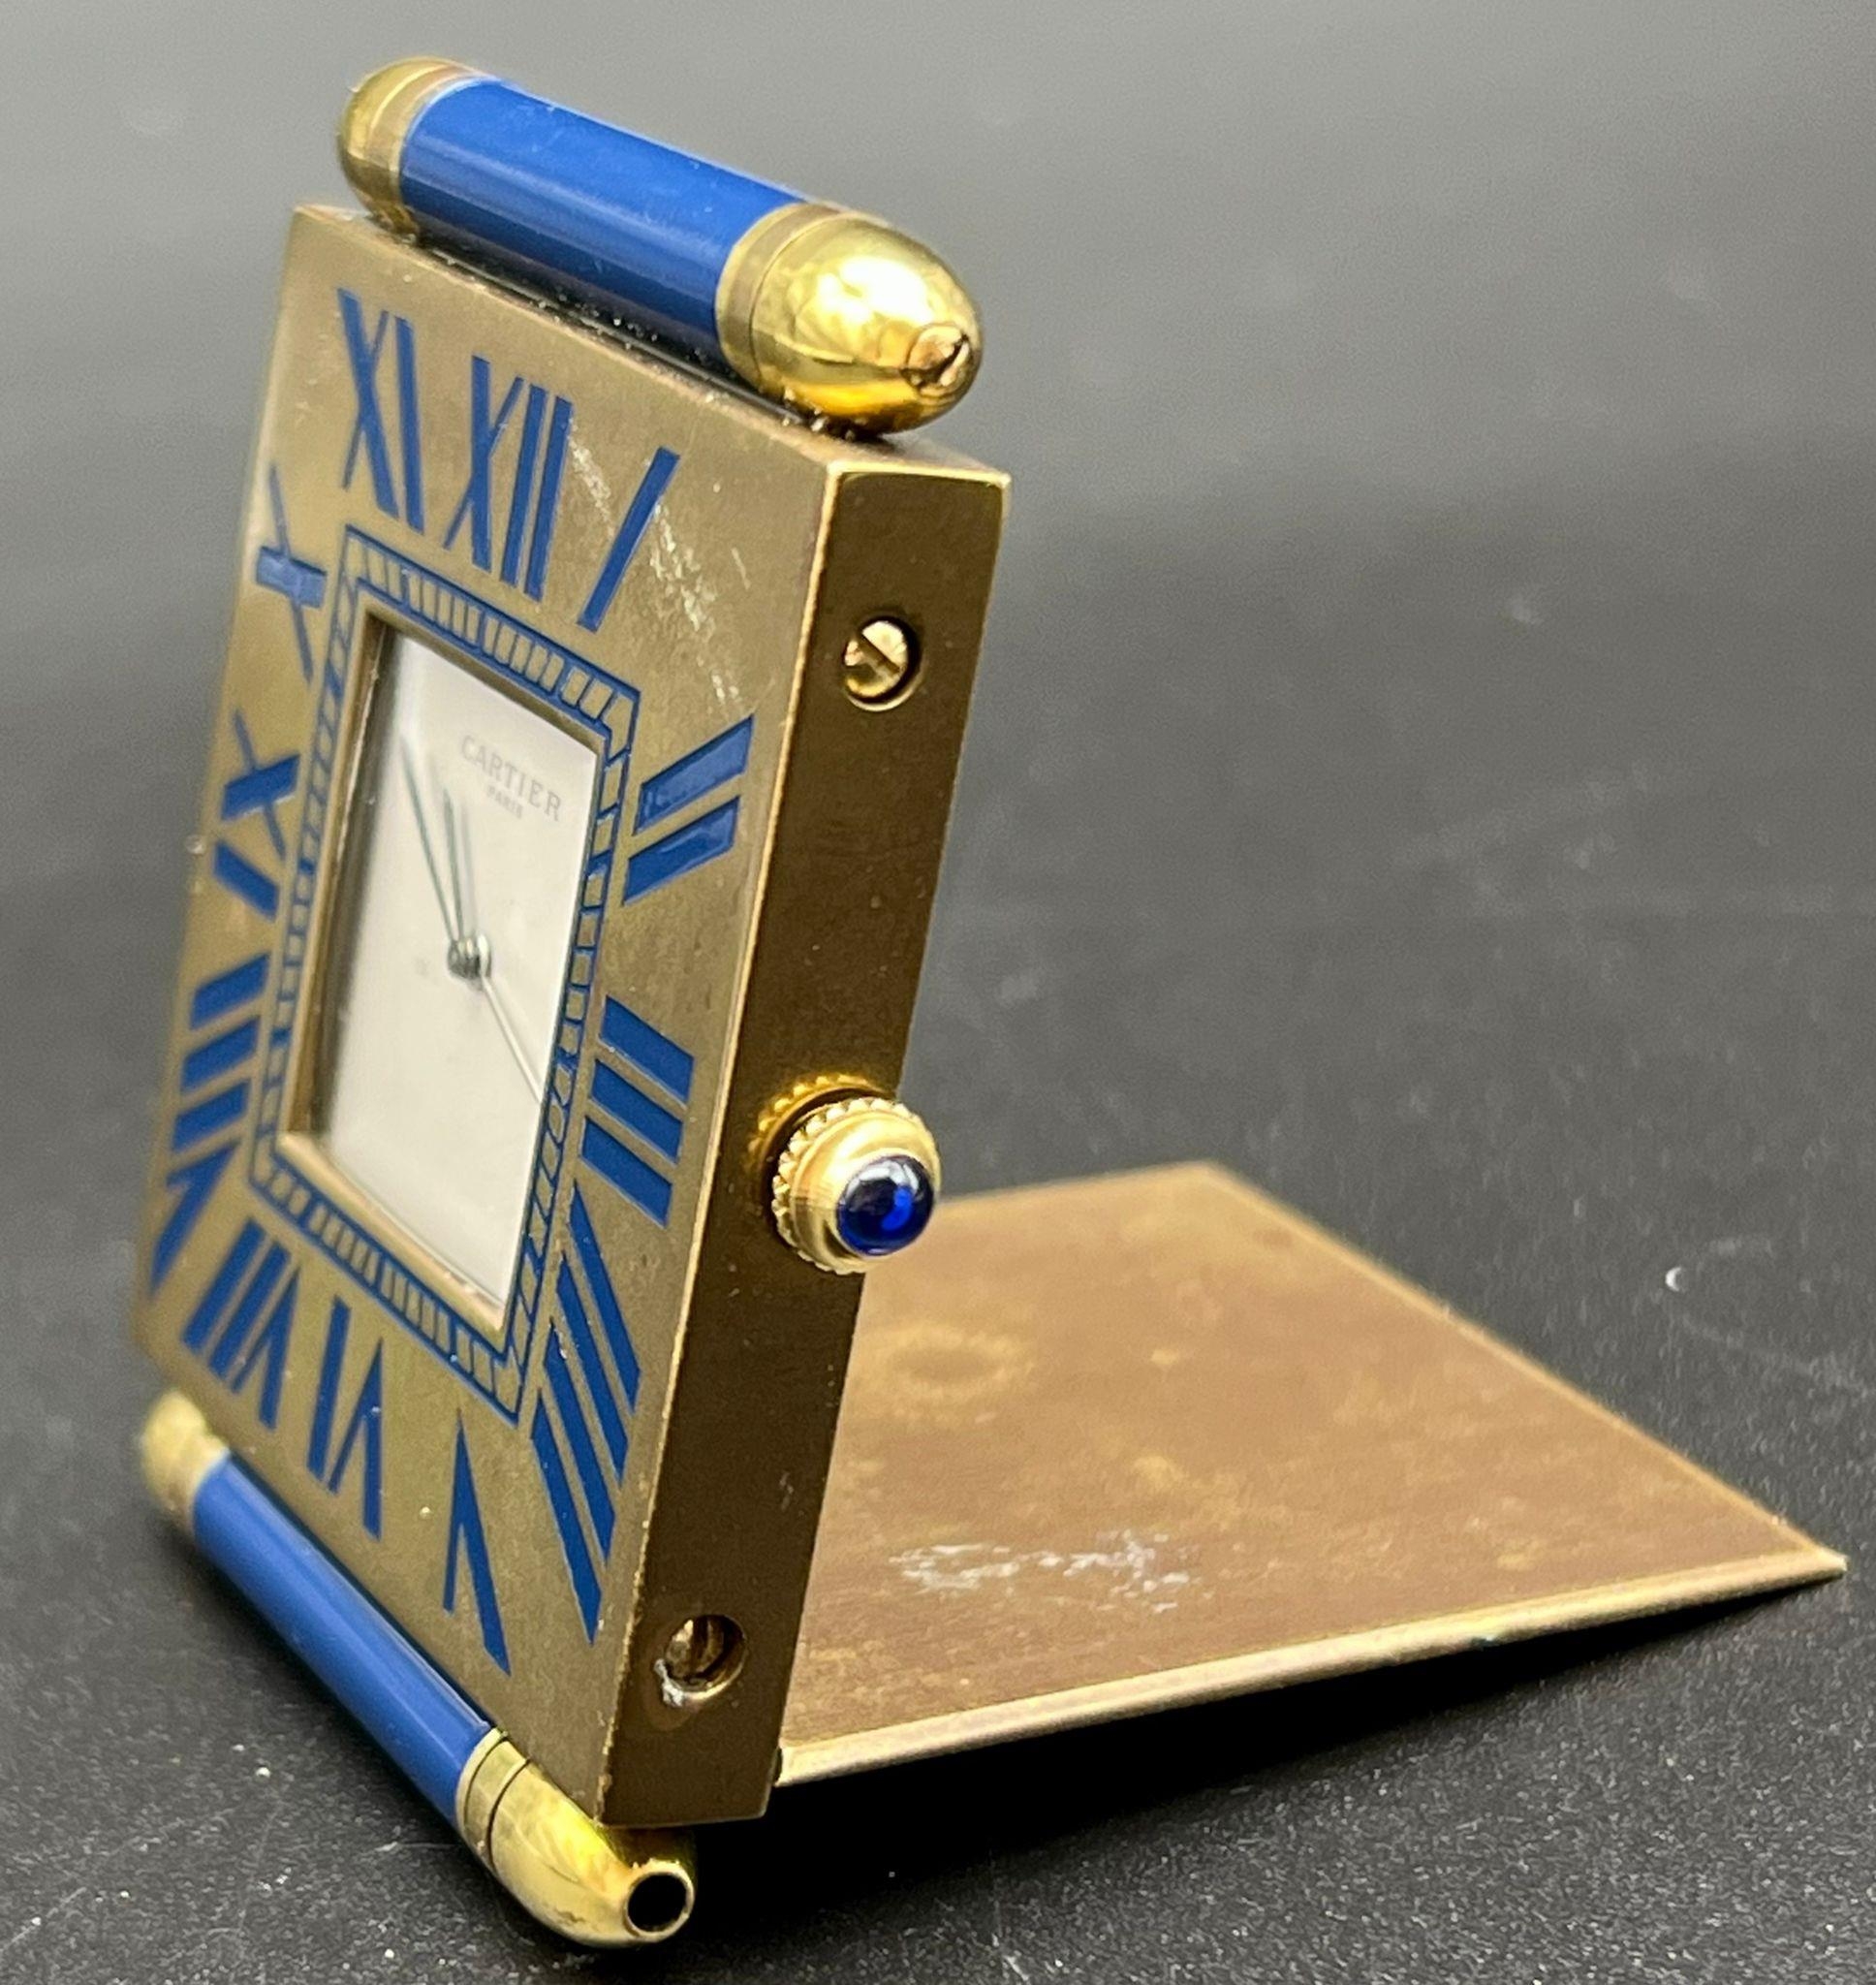 Cartier travelling alarm clock in working condition - Bild 2 aus 5